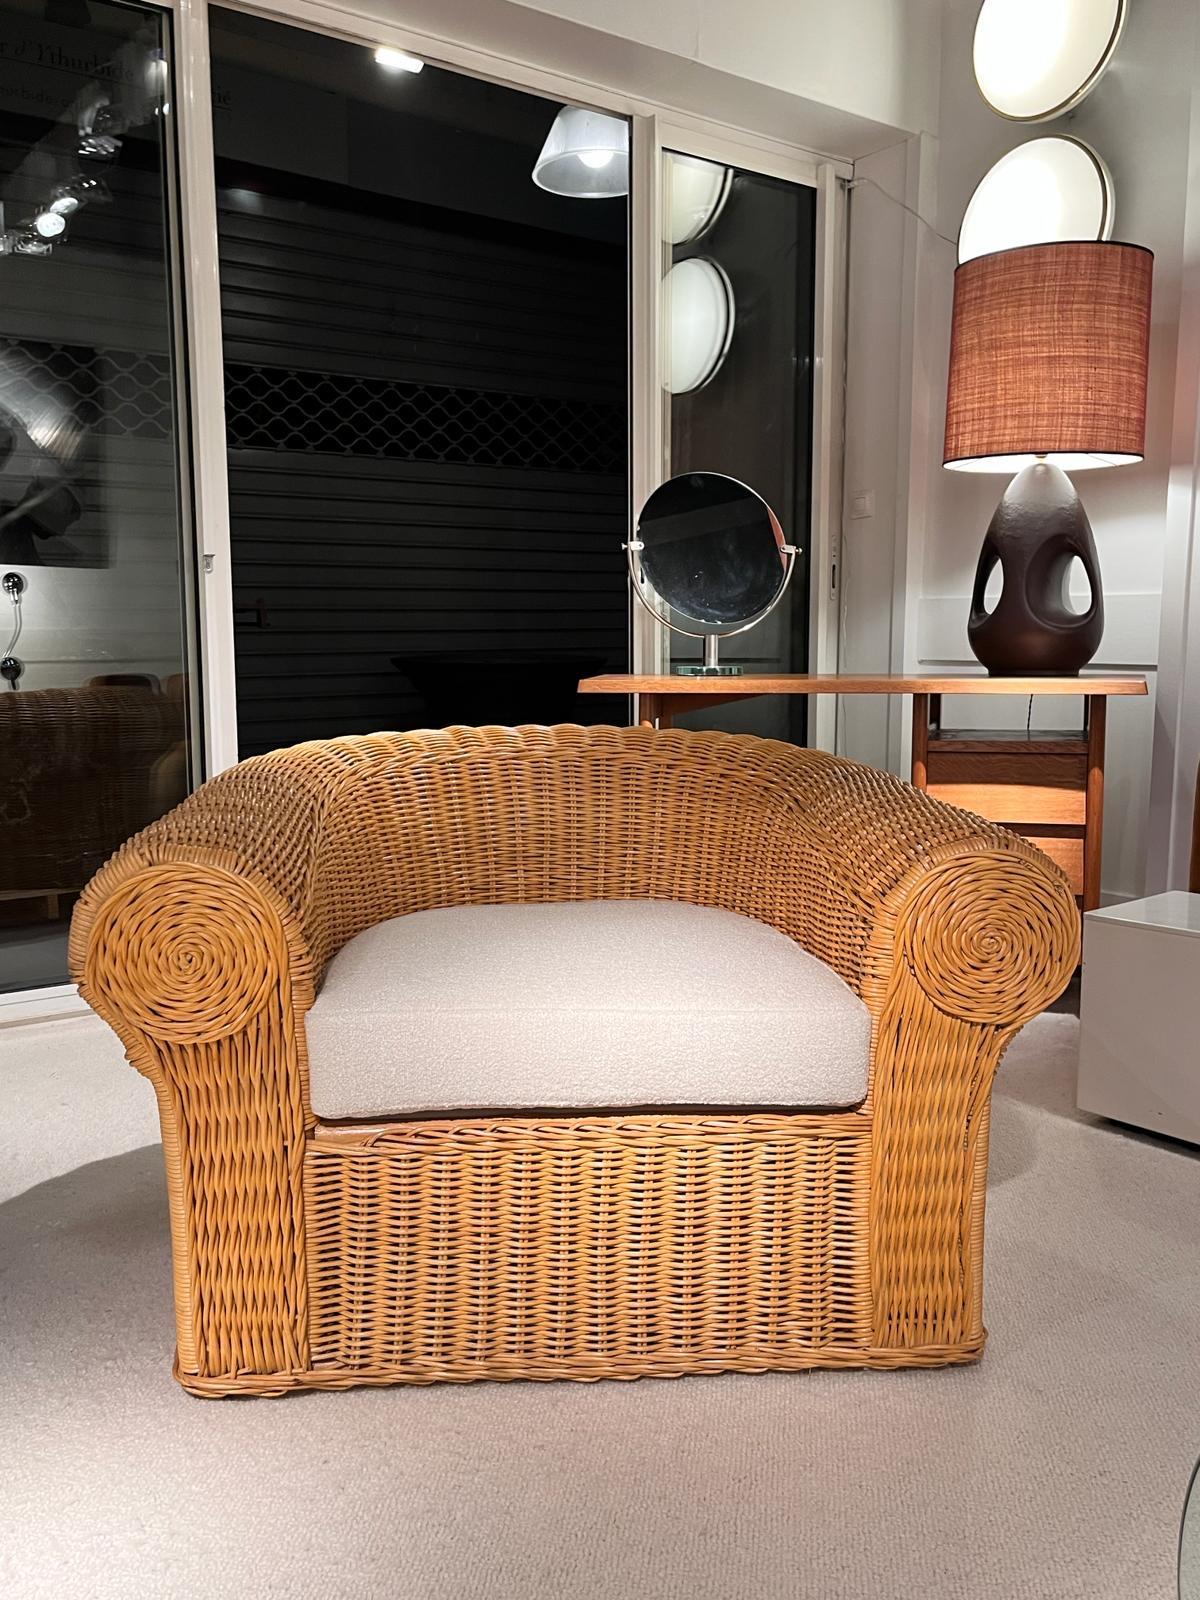 Rattan armchair with white fabric
France circa 1970
Length: 80 cm
Width: 70 cm
Depth: 80 cm